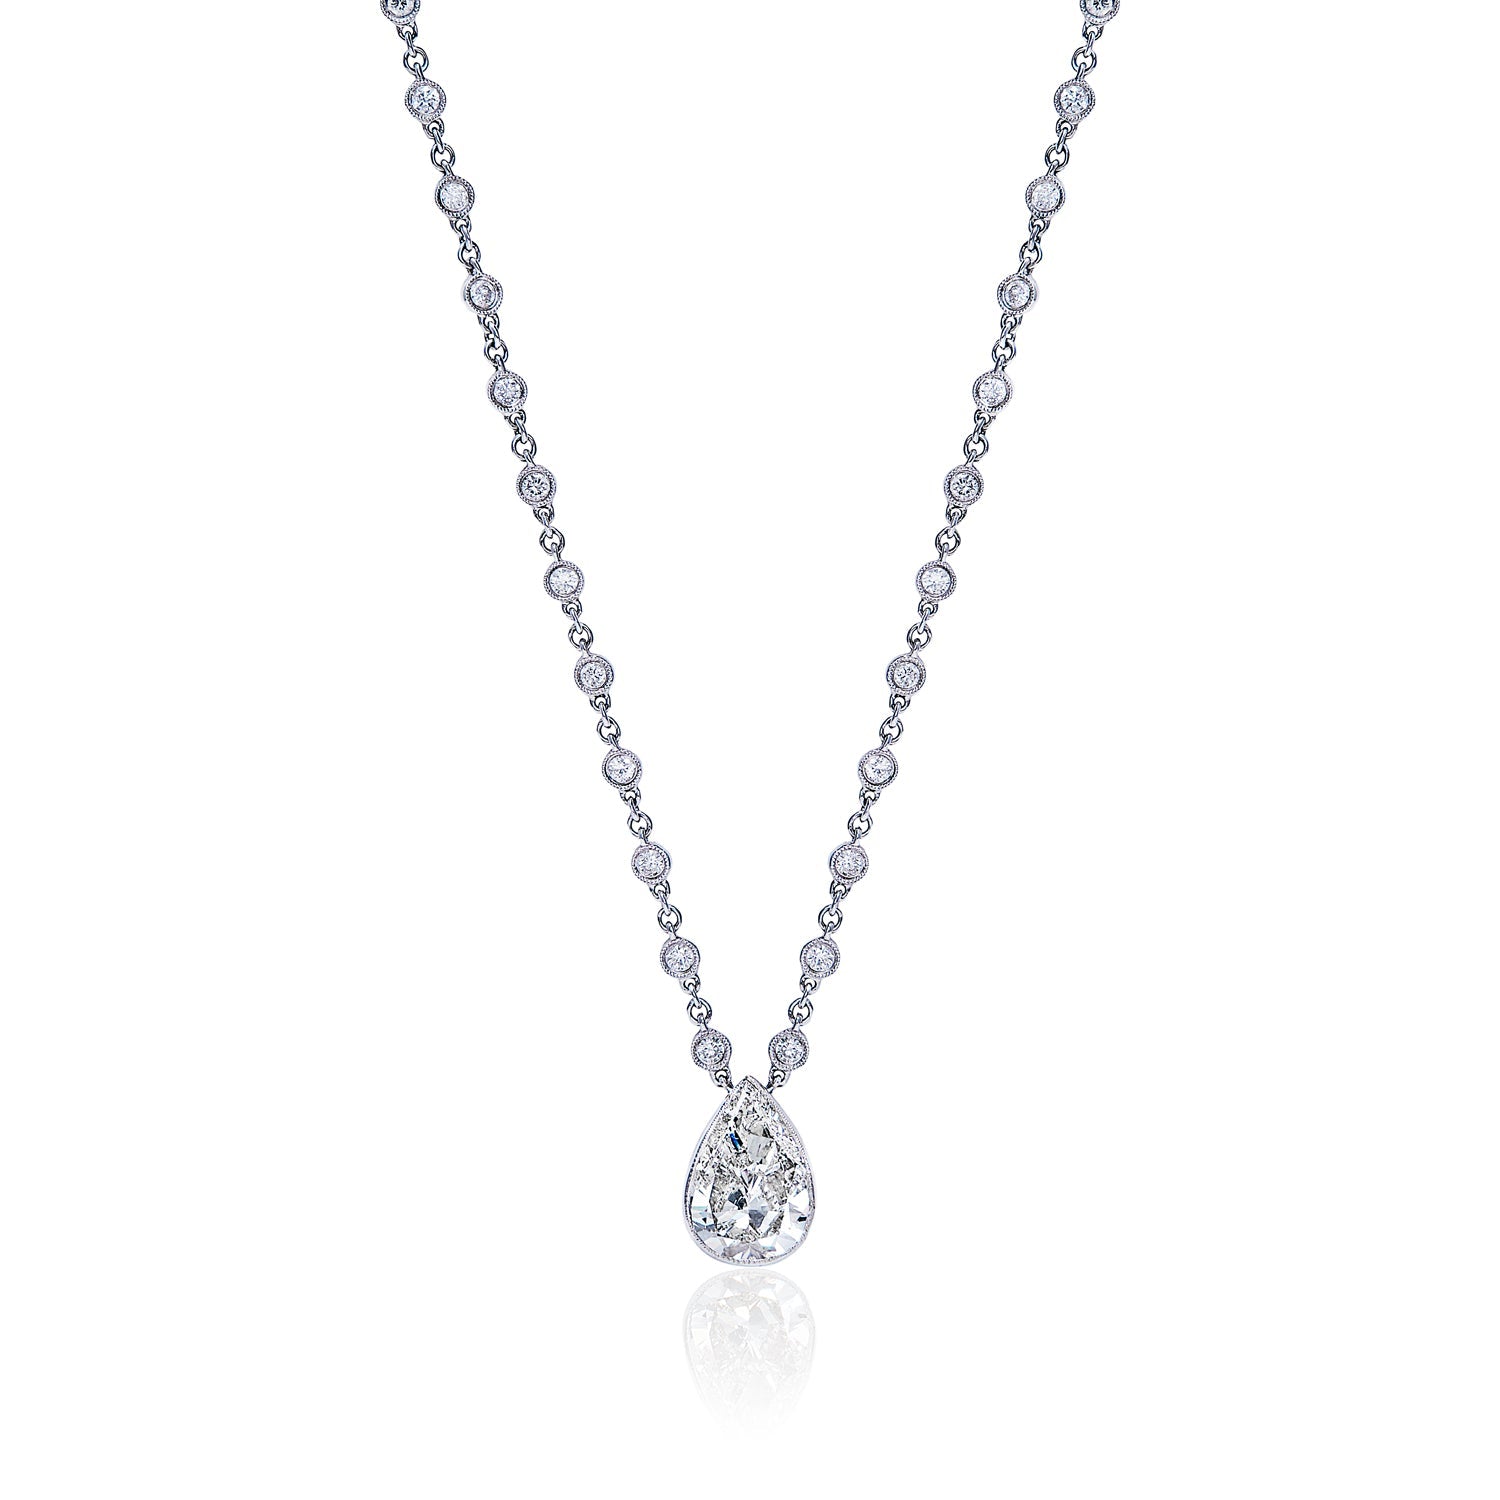 Dani 7 Carat Pear Shape Diamond Pendant Necklace in 18 Karat White Gold